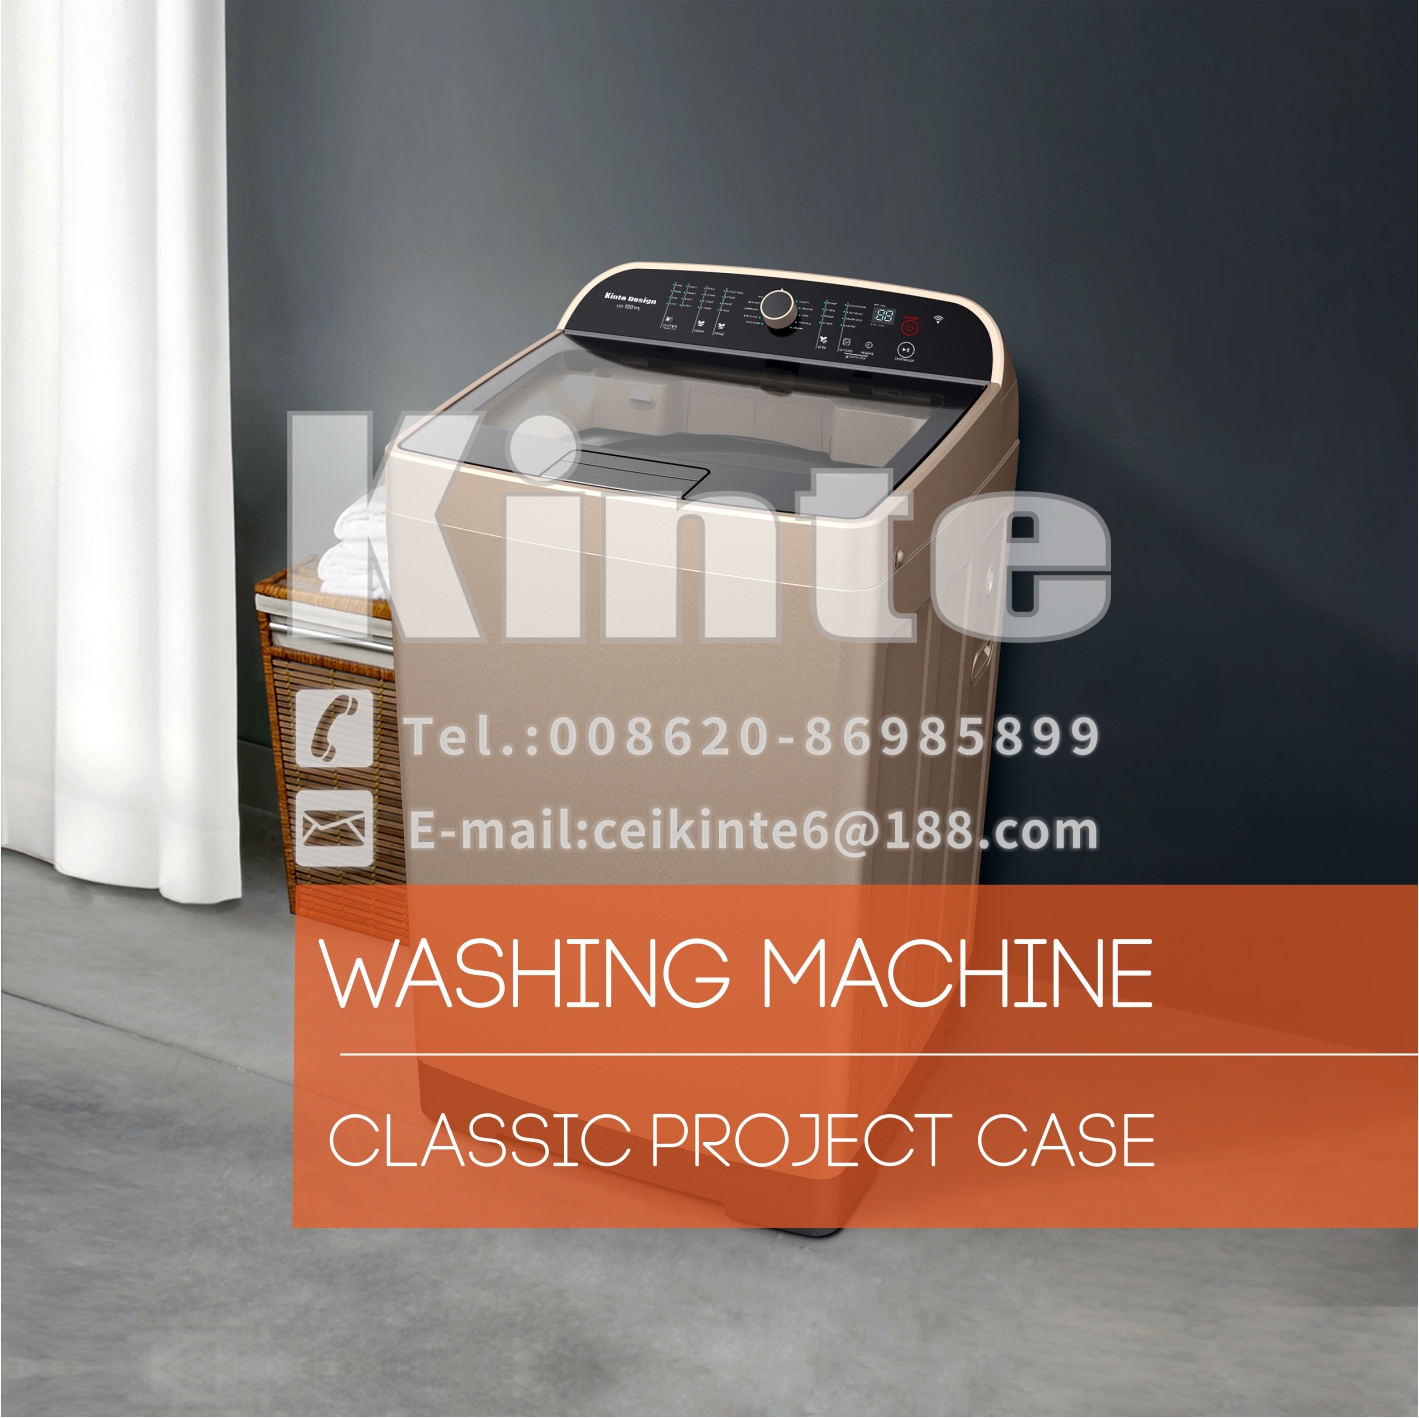 Washing machine design and processing